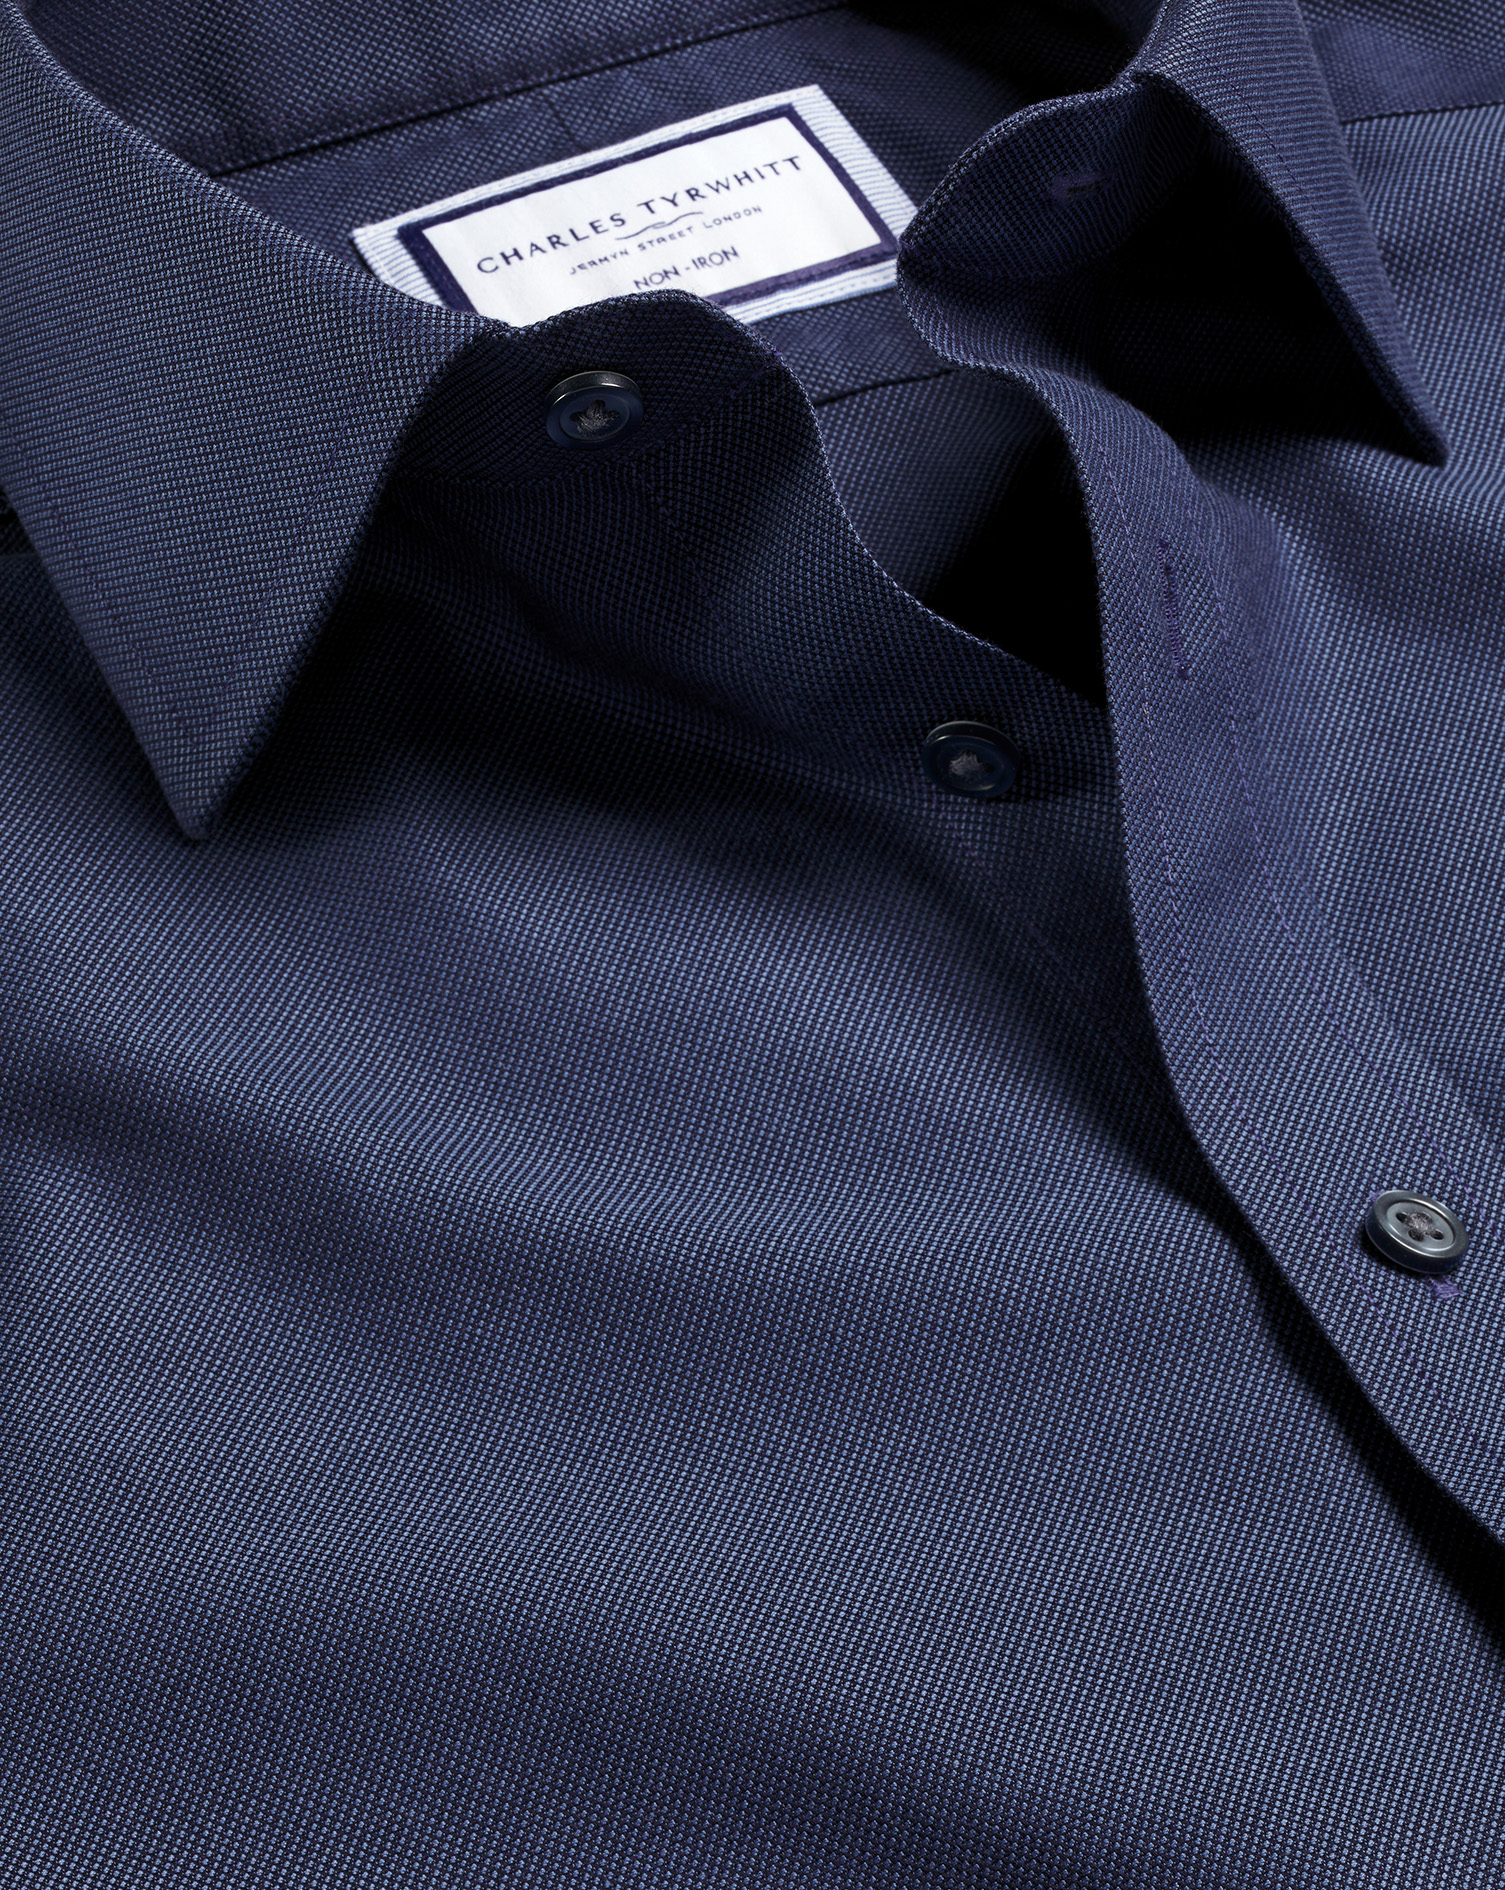 Men's Charles Tyrwhitt Non-Iron Royal Oxford Dress Shirt - French Blue French Cuff Size 15/33 Cotton